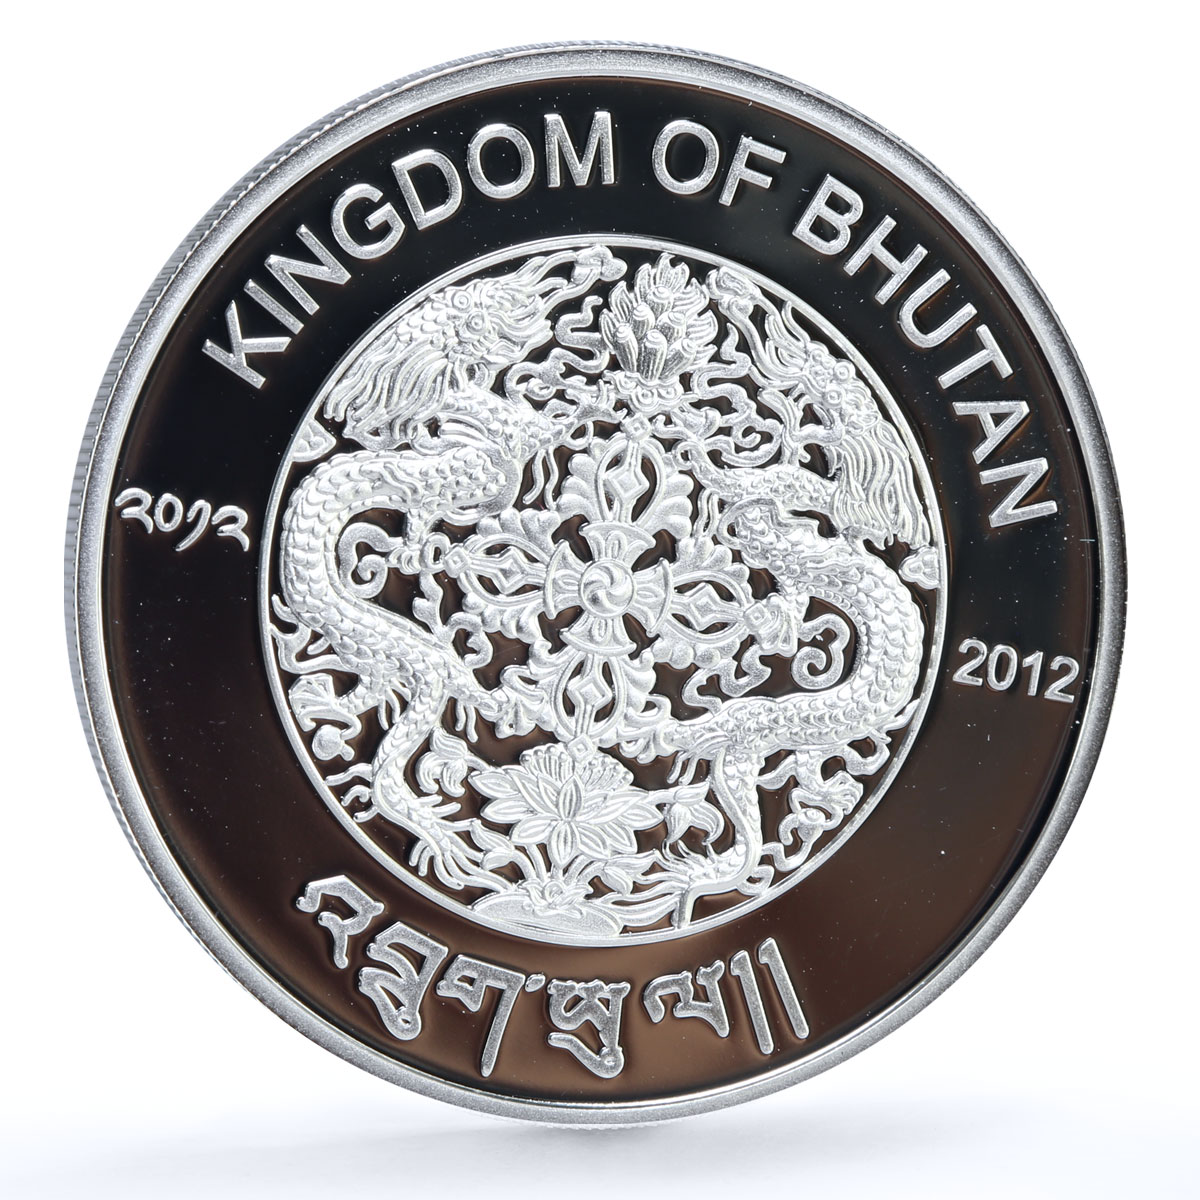 Bhutan 300 ngultrum Trains Railways Himalayan Locomotive proof silver coin 2012